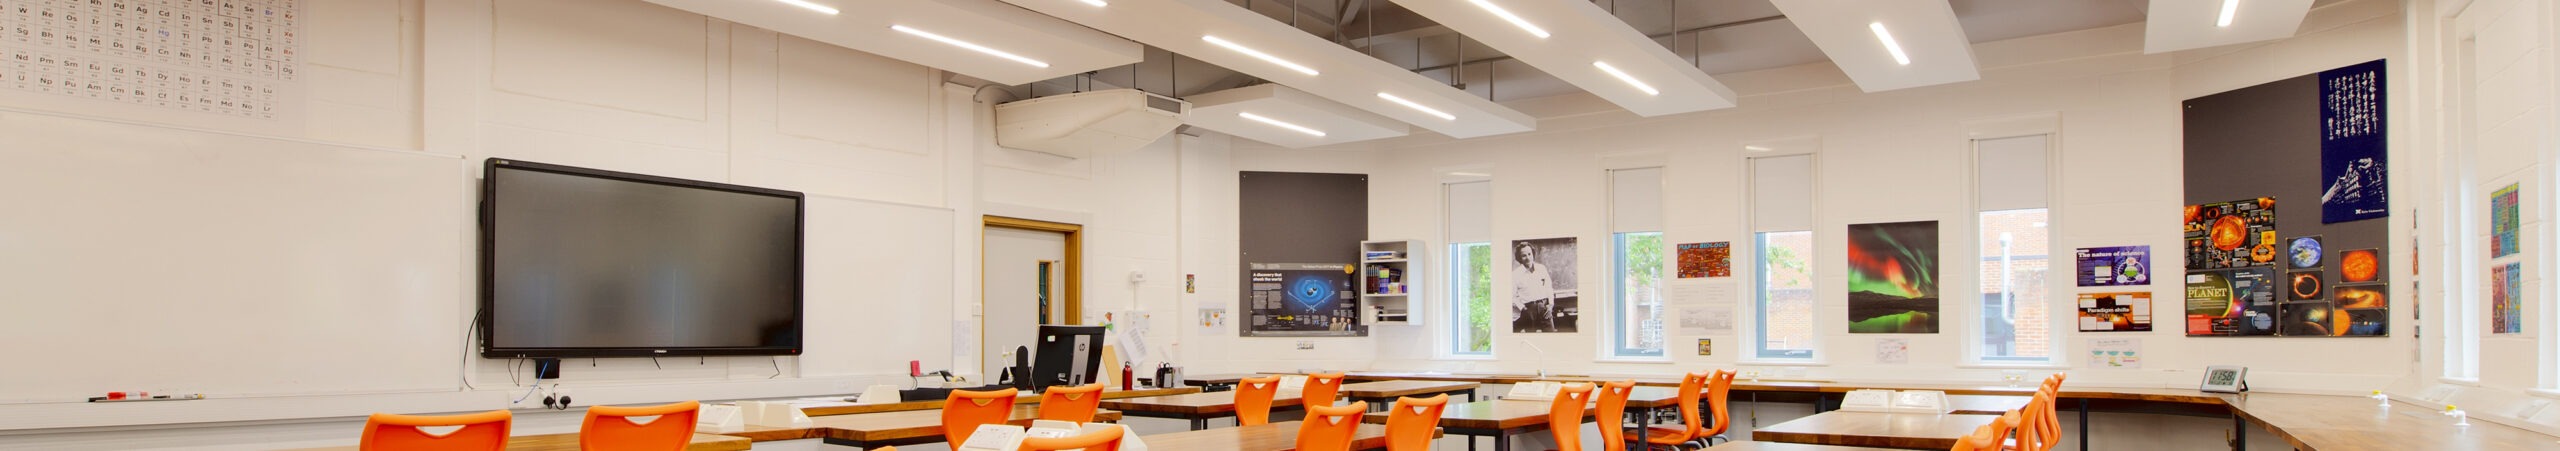 Tamlite Radley College Abingdon Education LED lighting Case Study classroom header image